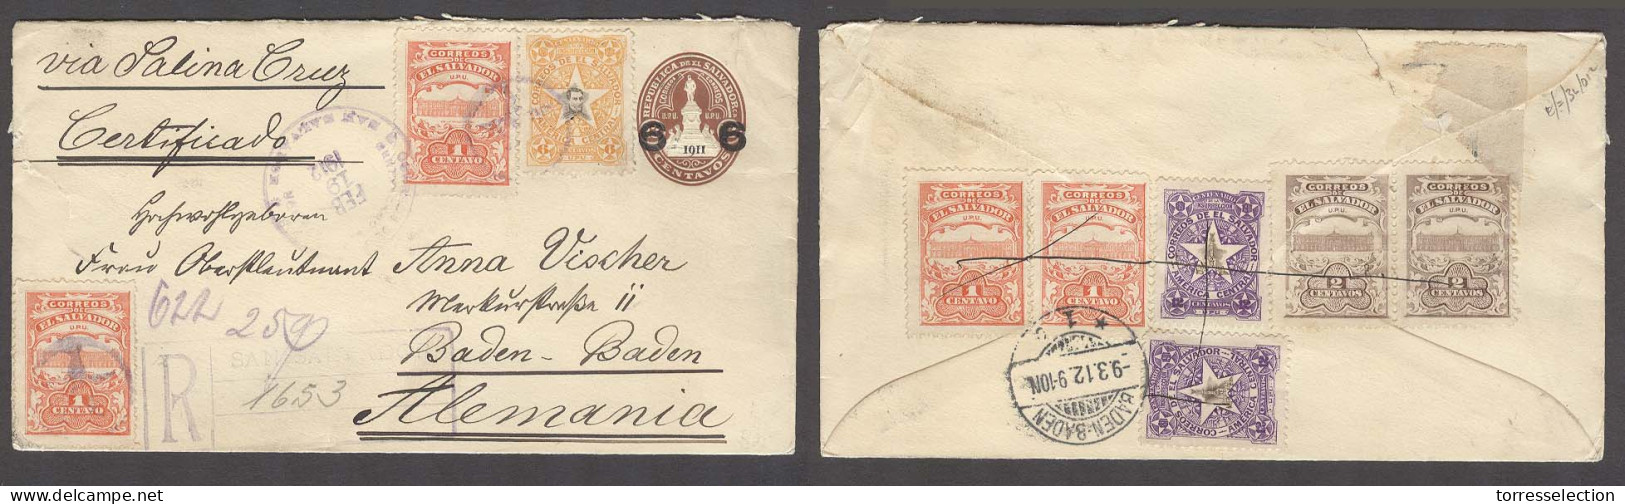 SALVADOR, EL. 1912 (19 Feb). S Salvador - Germany (9 March). Reg Multifkd 6c UPU Brown Ovtd Stat Env + 9 Adtl Stamps + A - El Salvador